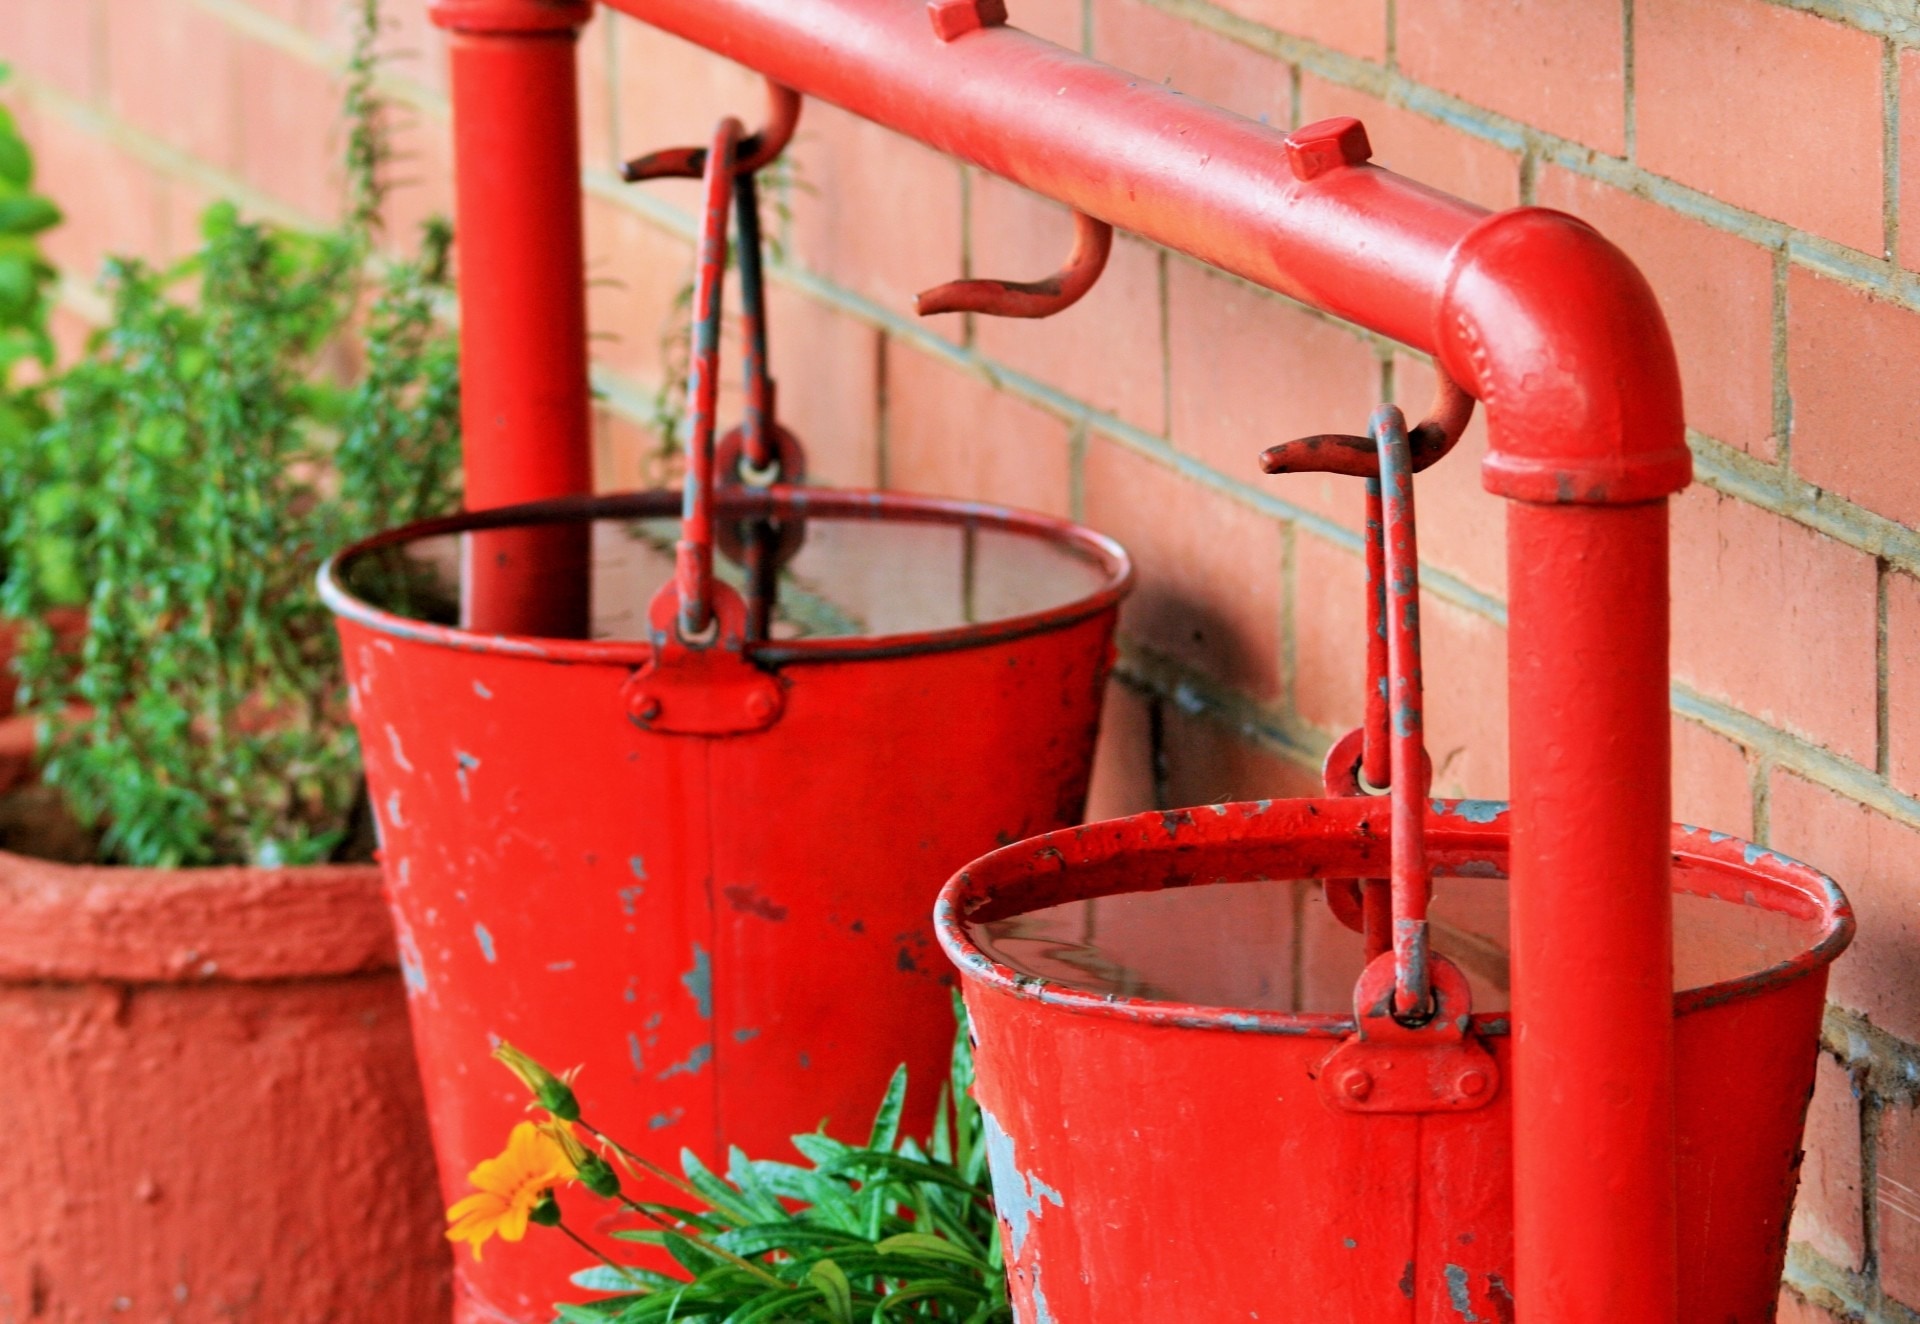 2 red metal buckets